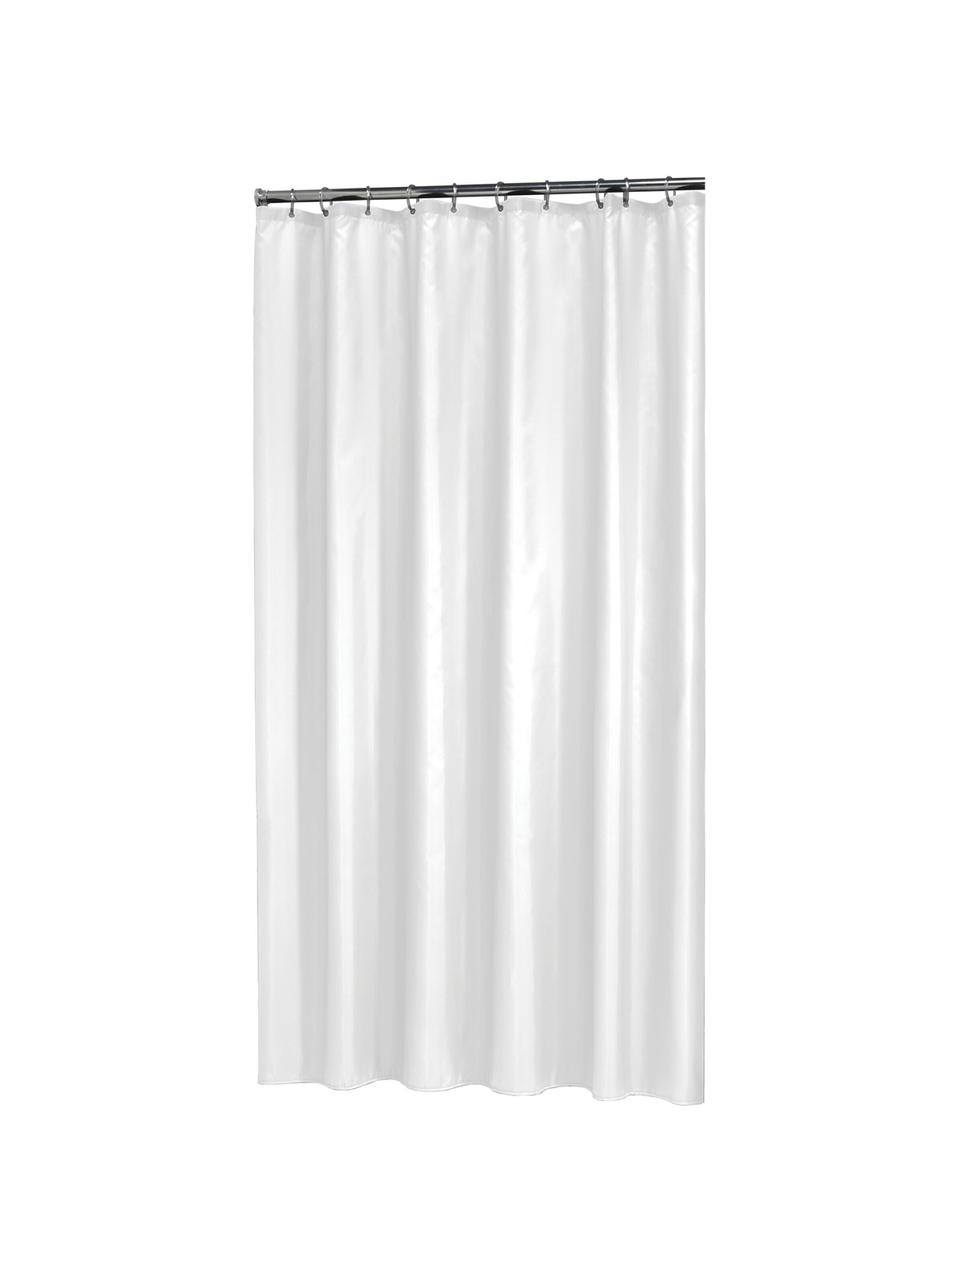 Rideau de douche blanc Granada, 100 % polyester, Blanc, larg. 180 x long. 200 cm